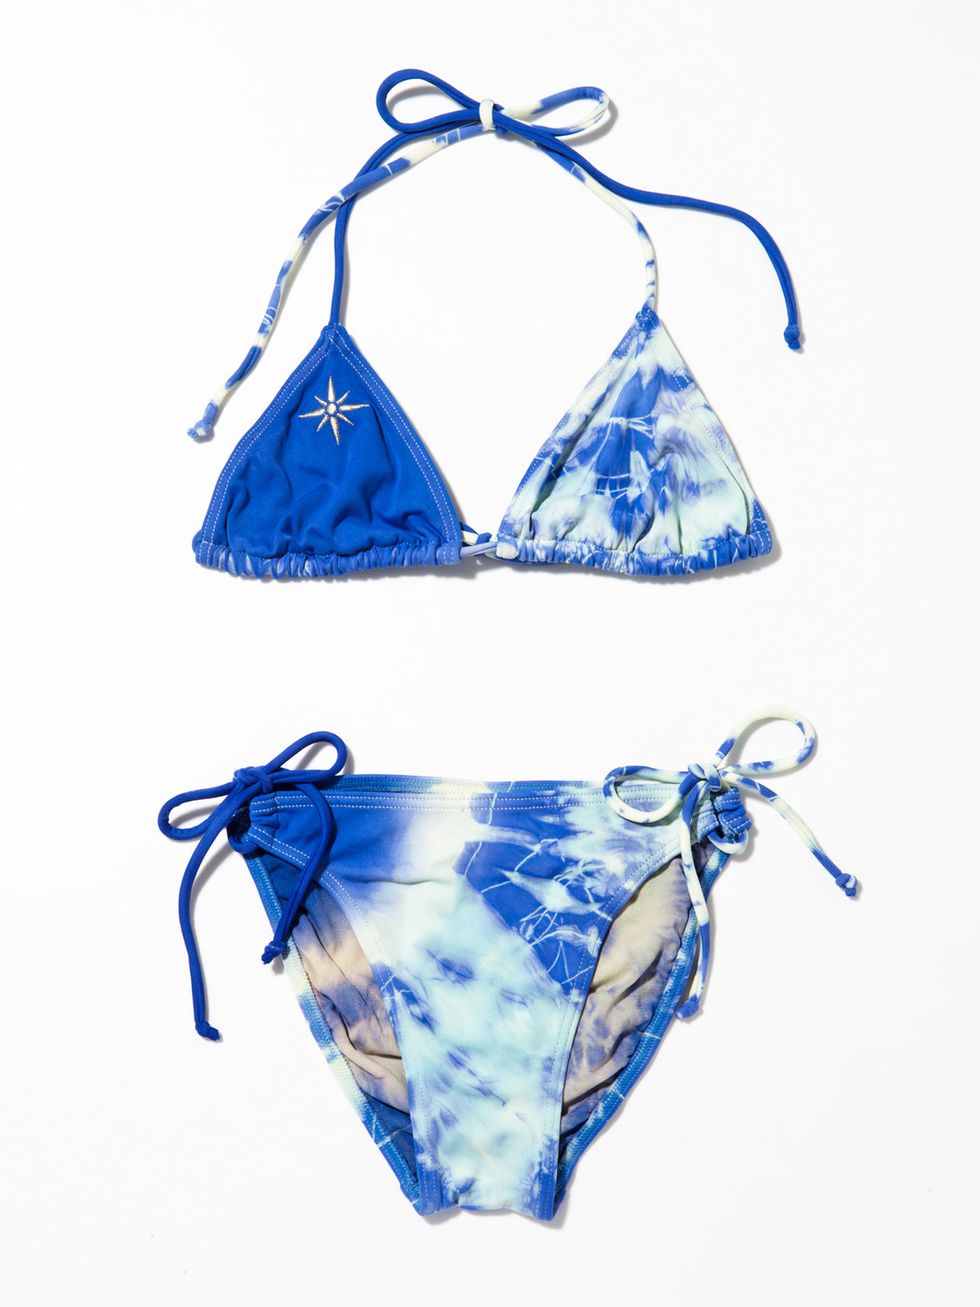 Blue, Product, Undergarment, Lingerie, Bikini, Cobalt blue, Brassiere, Bag, Electric blue, Azure, 